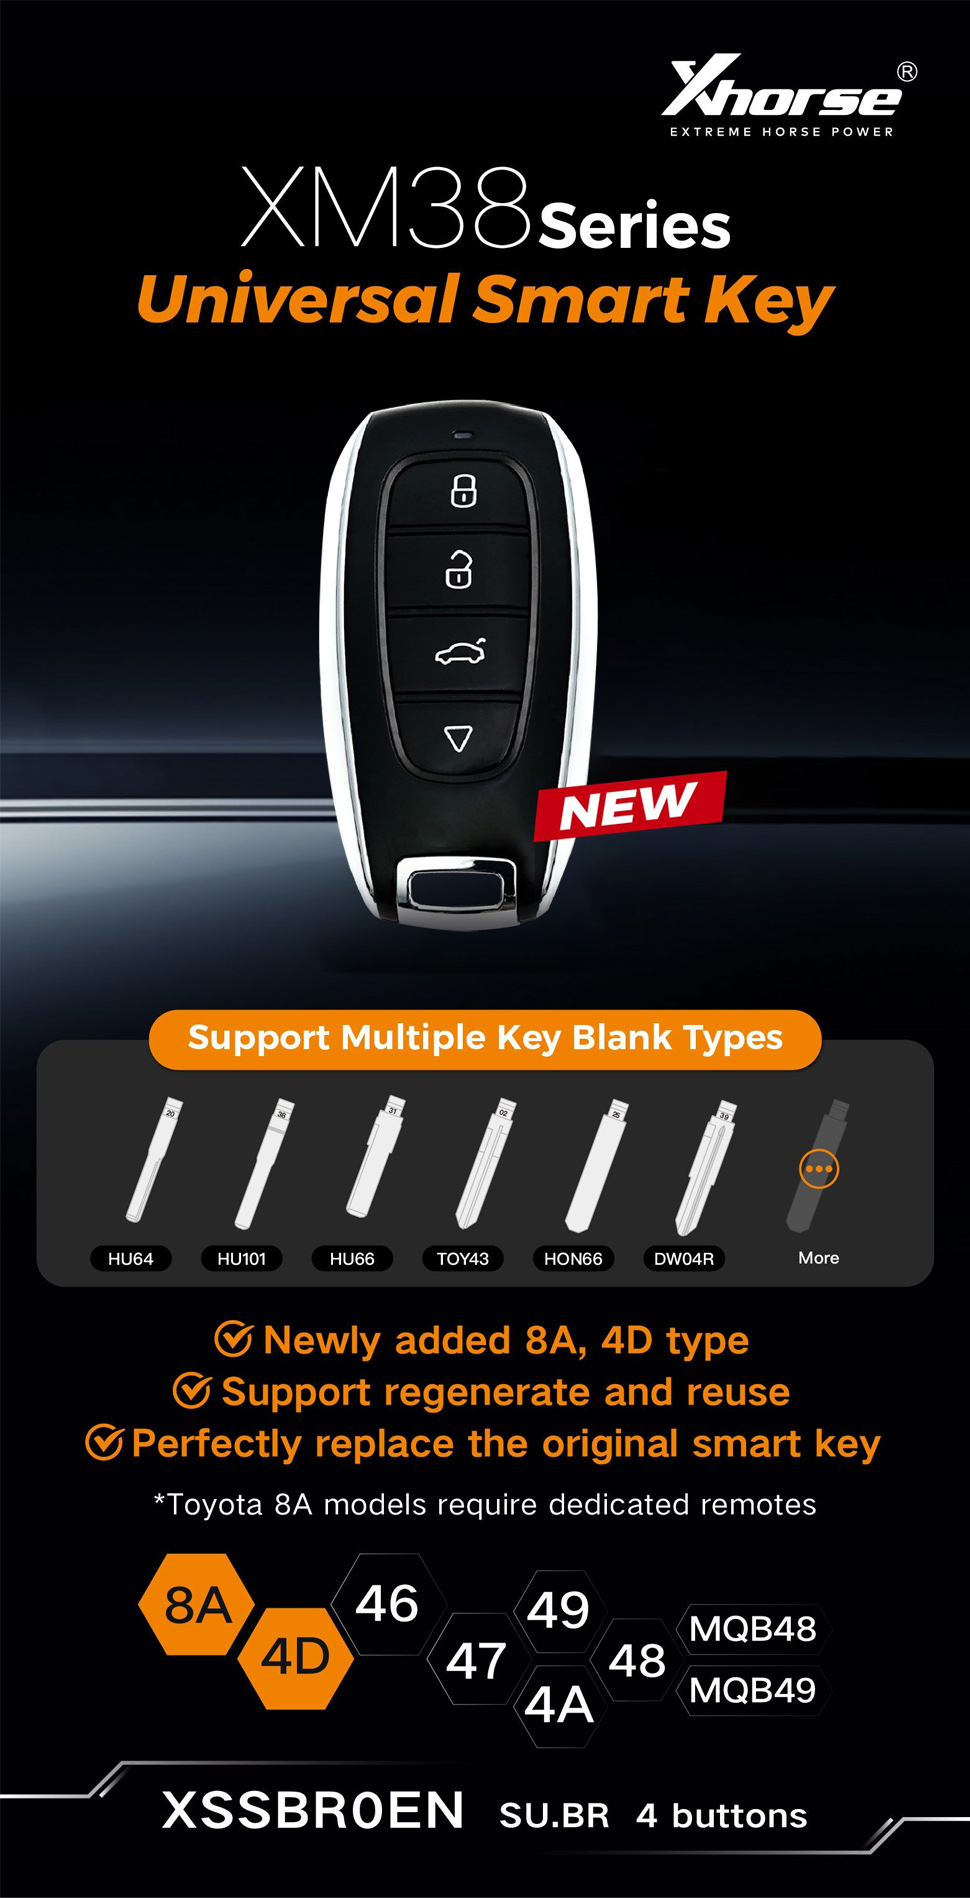 Xhorse XSSBR0EN Subaru Style 4 Buttons XM38 Smart Key